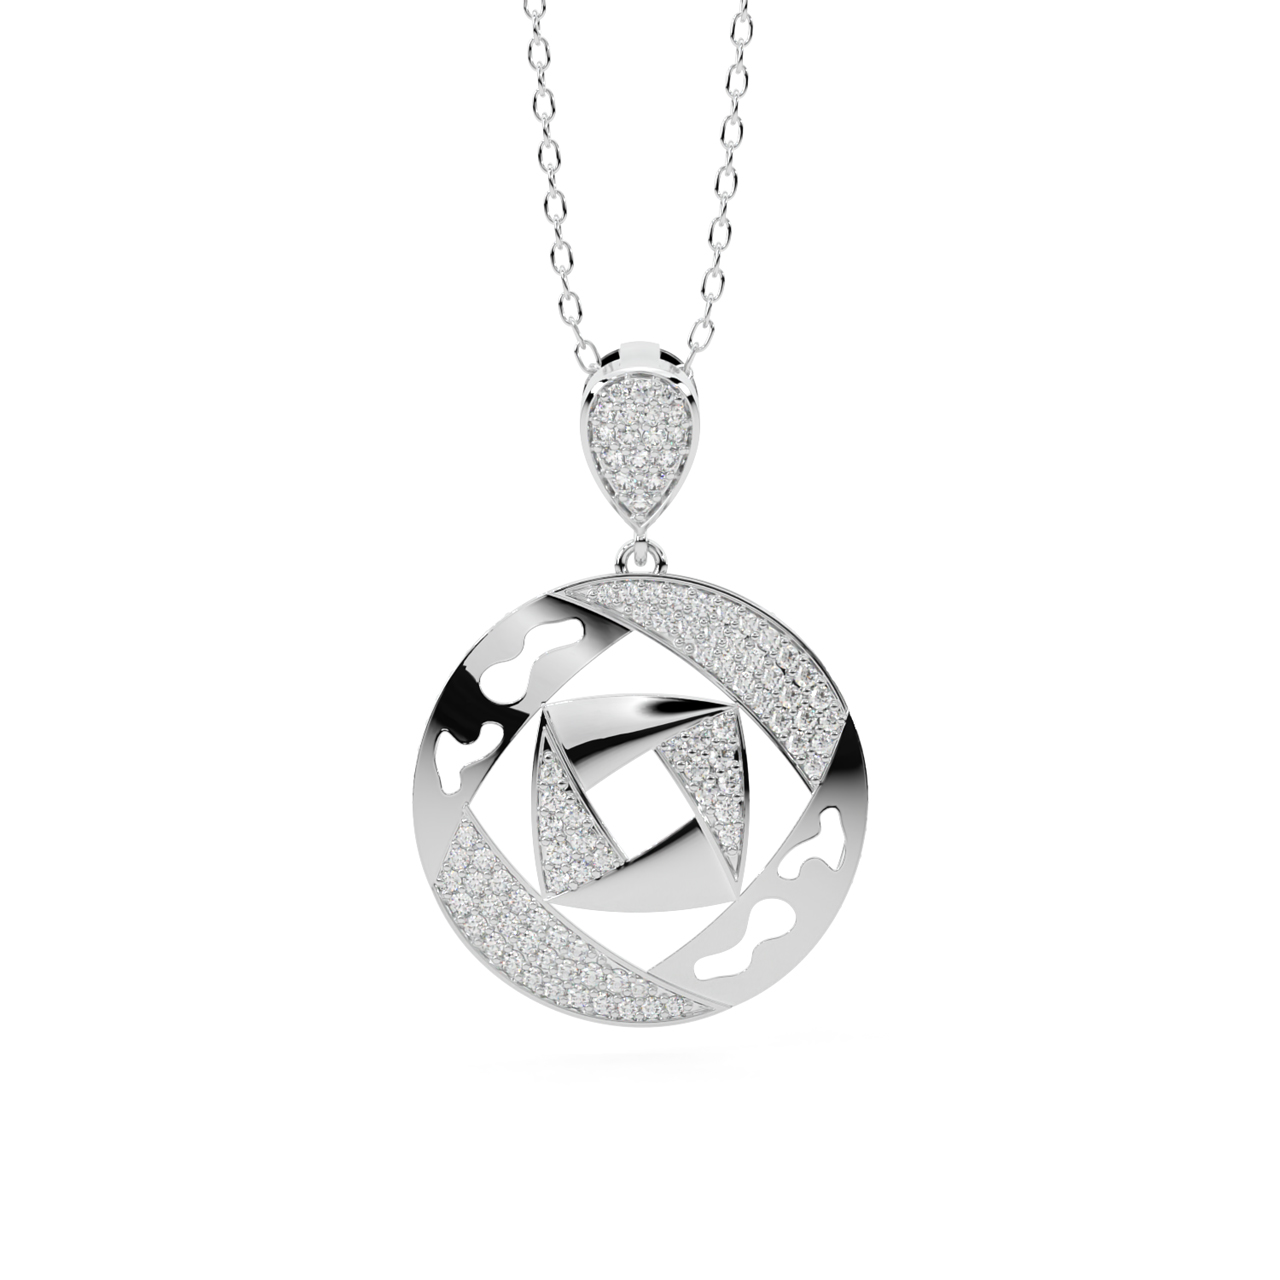 The Geometric Design Diamond Pendant